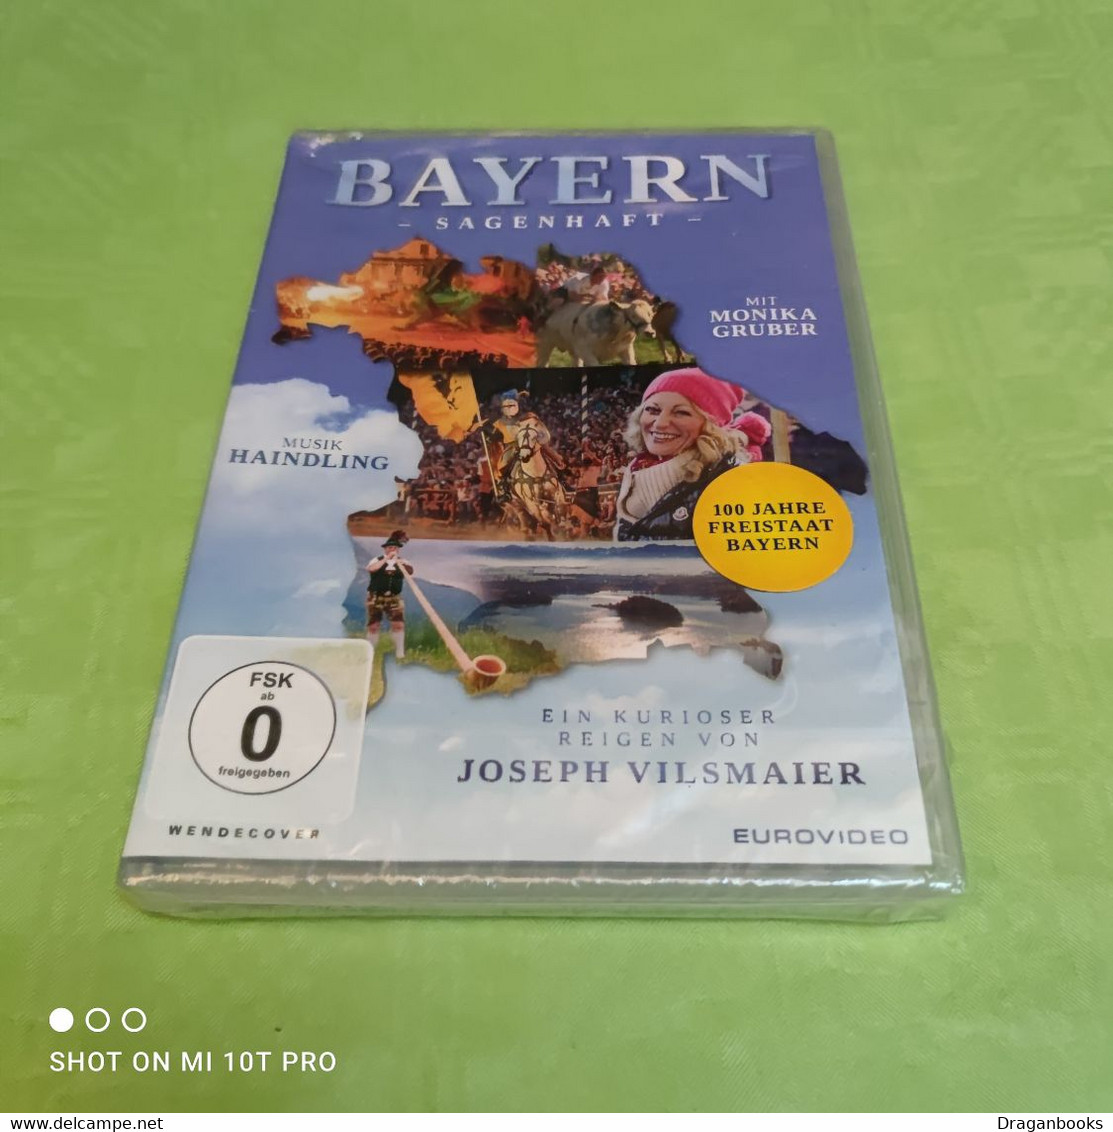 Bayern Sagenhaft - Travel